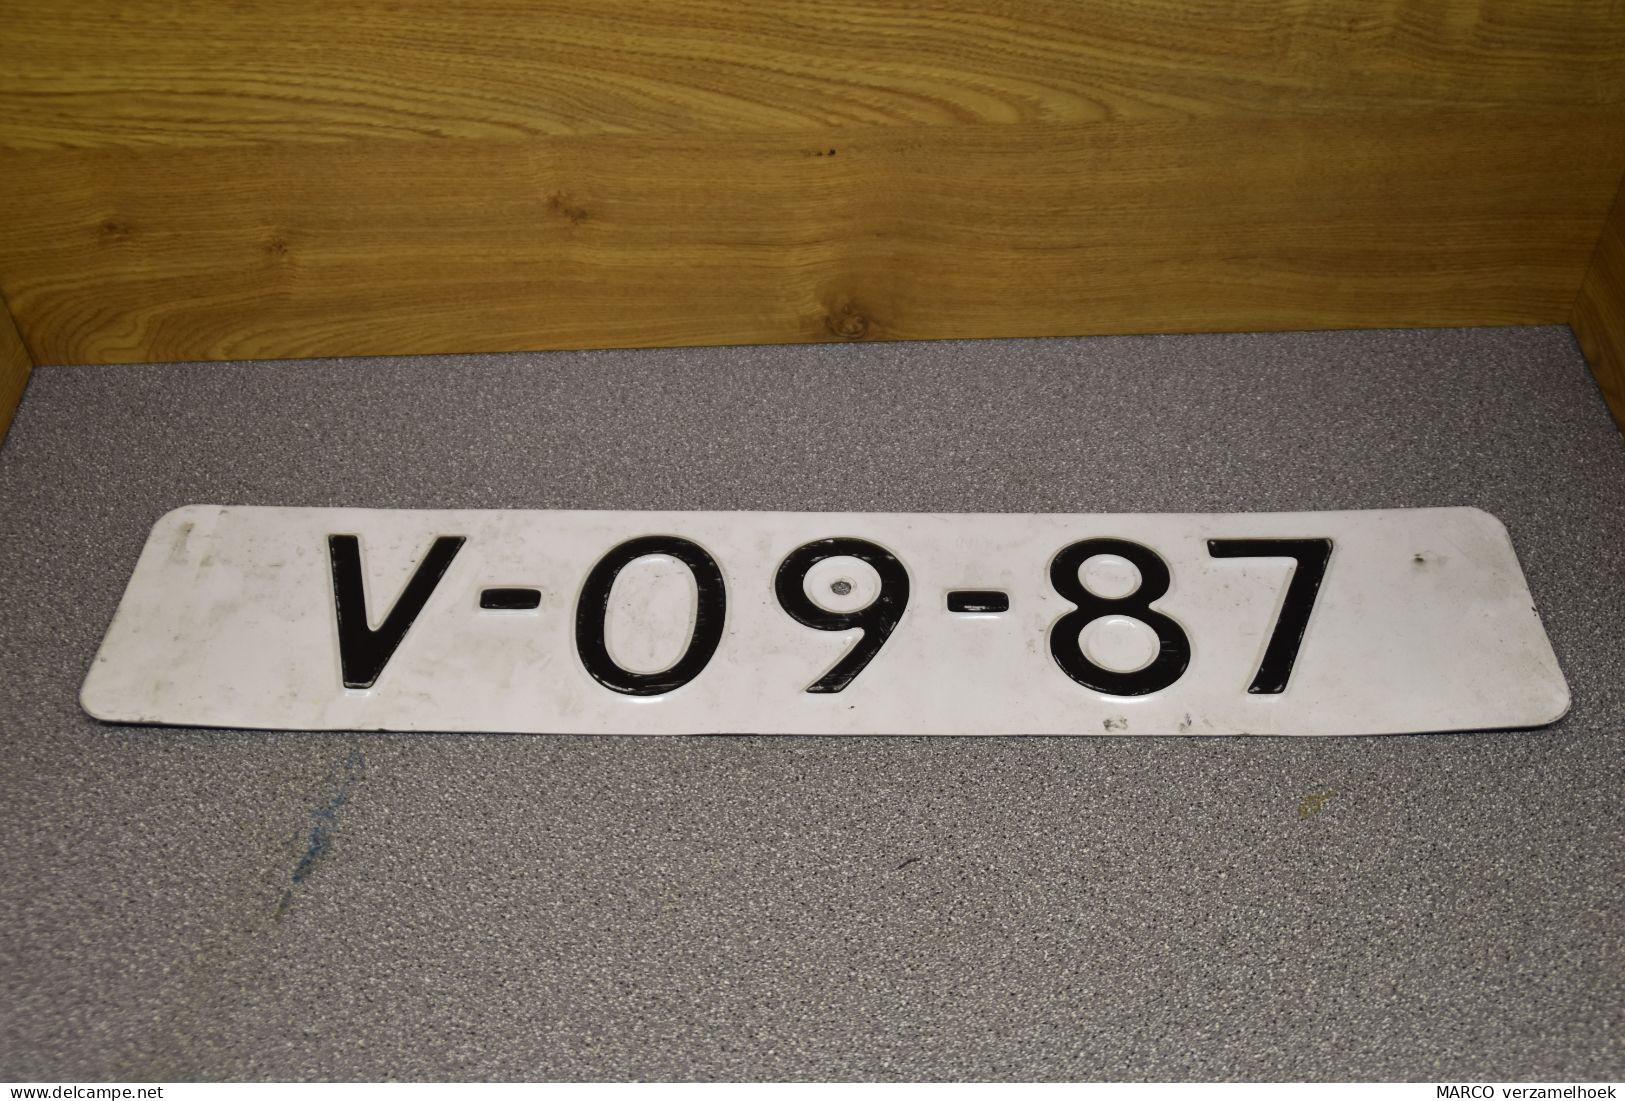 License Plate-nummerplaat-Nummernschild Nederland NL Tijdelijke Plaat Limburg Oud-old - Plaques D'immatriculation